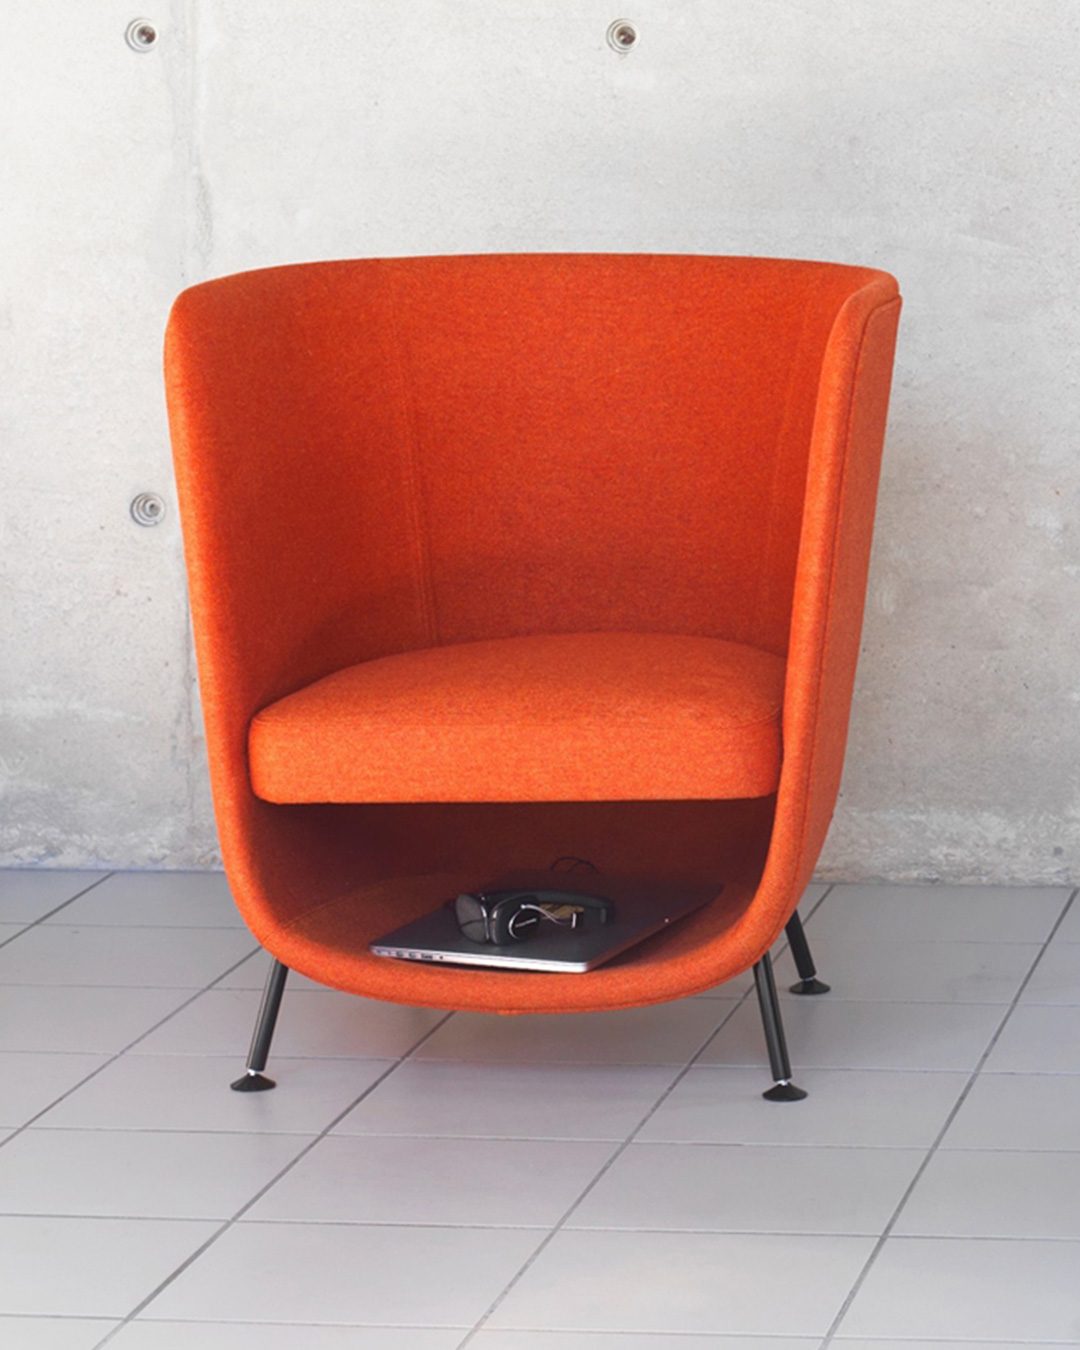 sillon pocket chair de color naranja